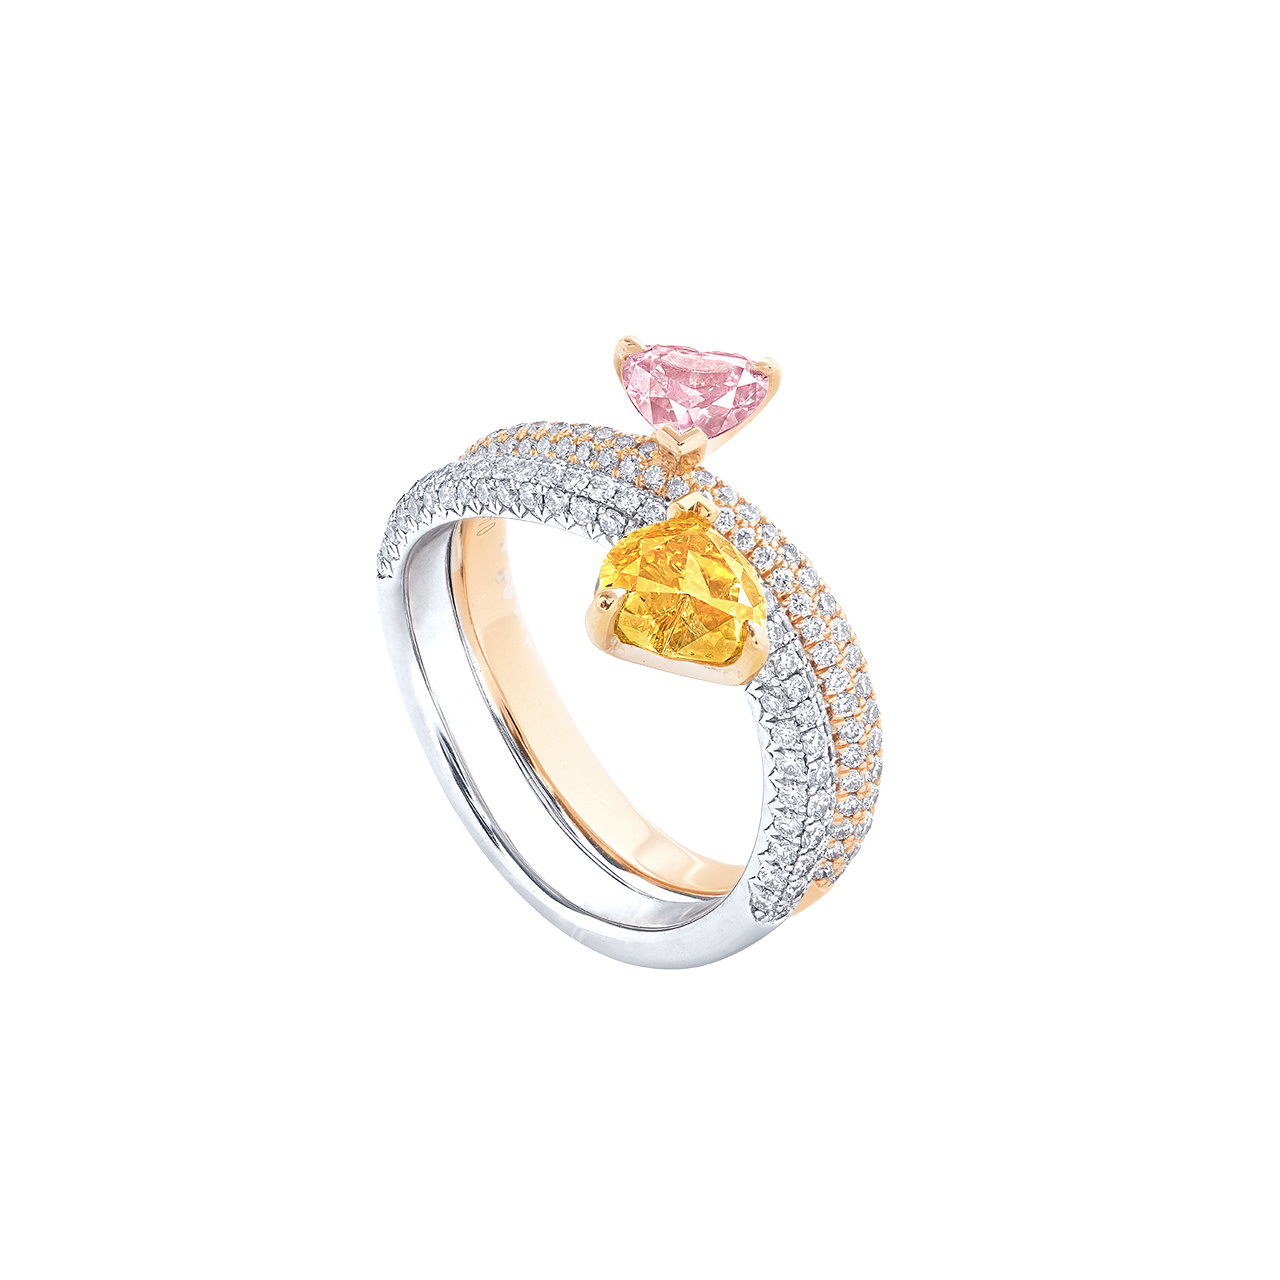 艷彩黃橘鑽與阿蓋爾紫粉鑽鑽戒
Fancy Vivid Yellowish Orange Colored Diamond, 
Purplish Pink Diamond from Argyle Mi